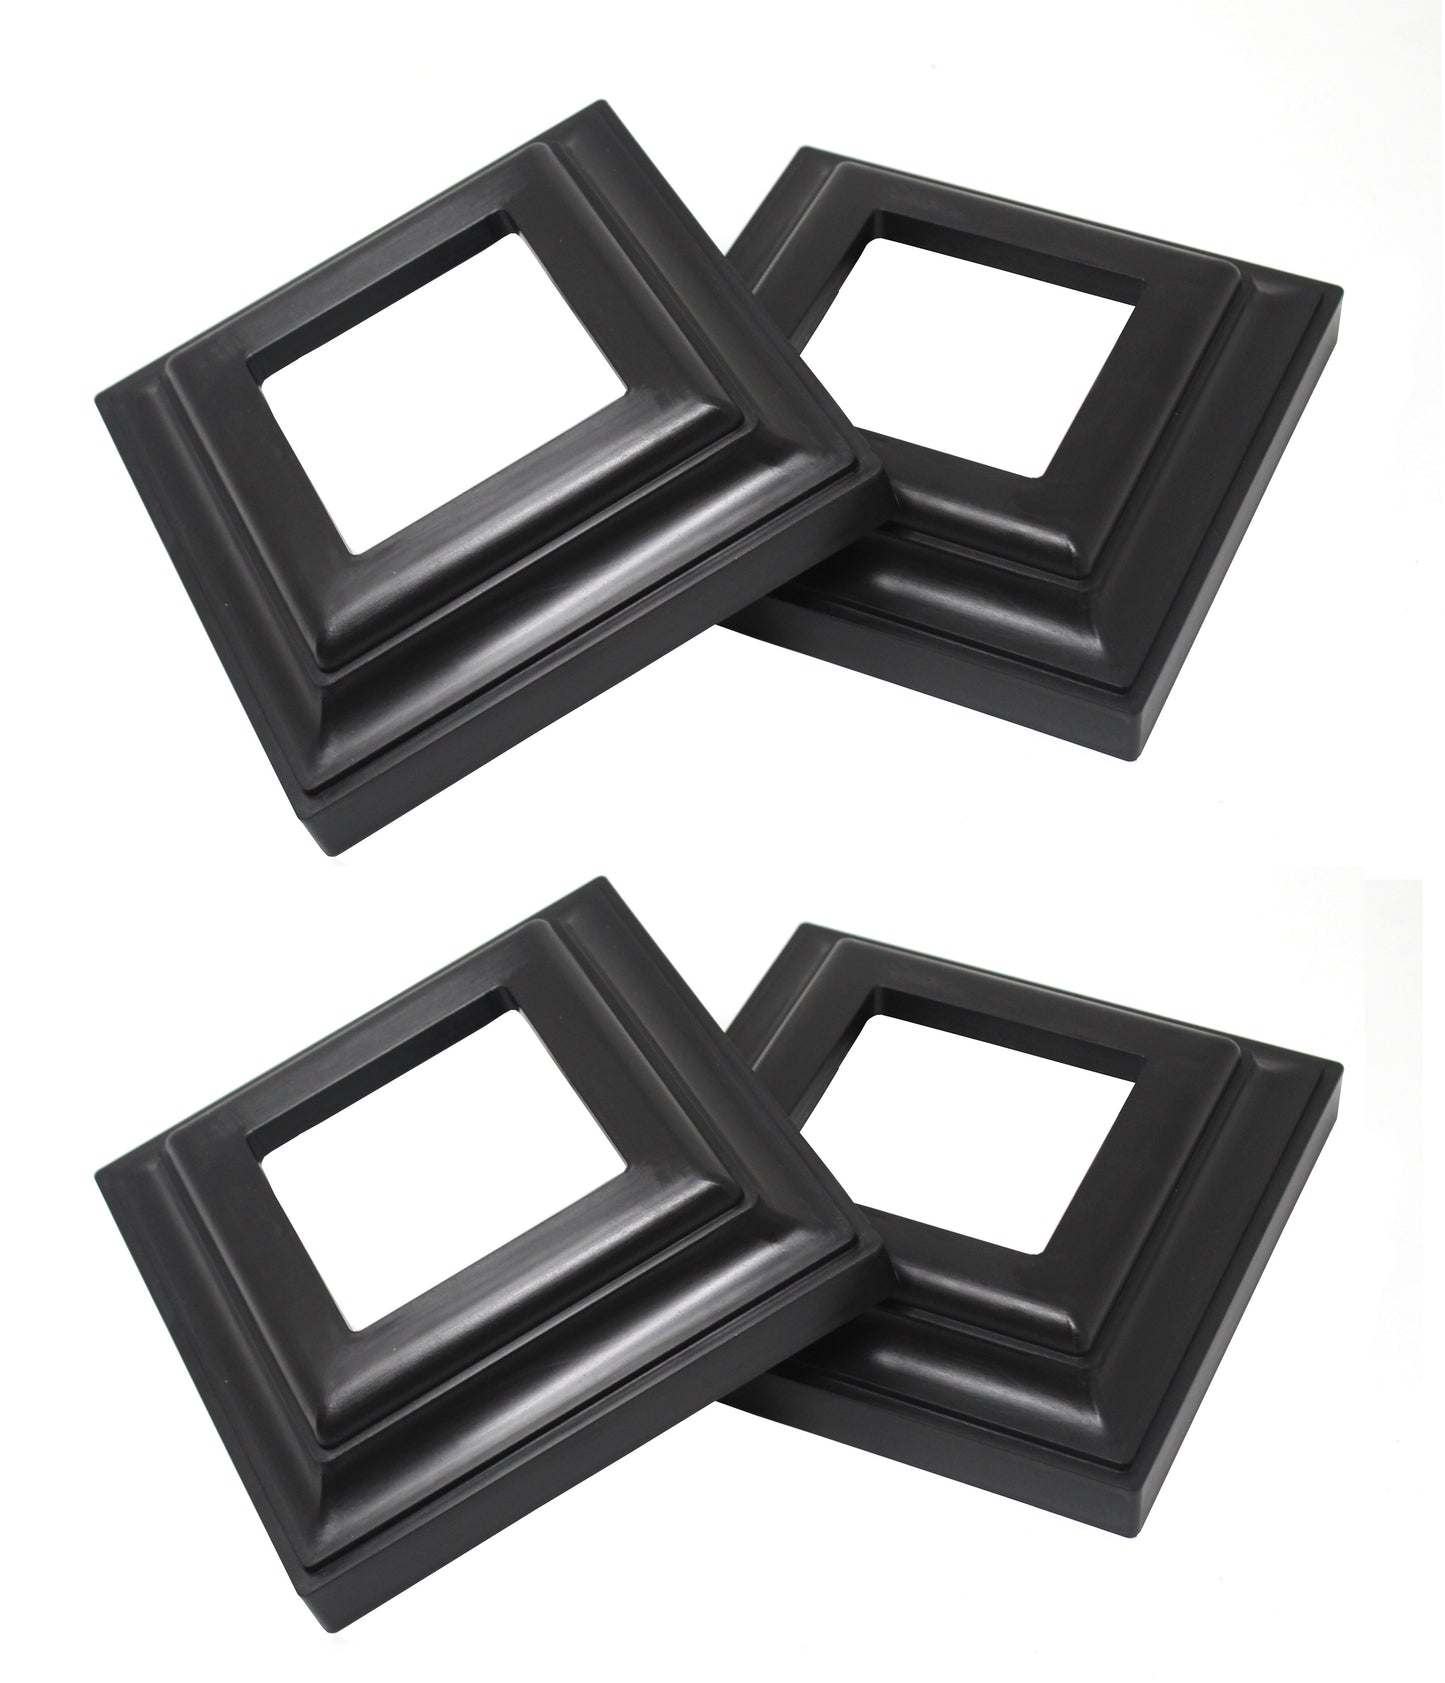 Post Trim Ring 3x3 Black Plastic Column Post Base Trim Ring for Columns/Posts on Decks, Porches